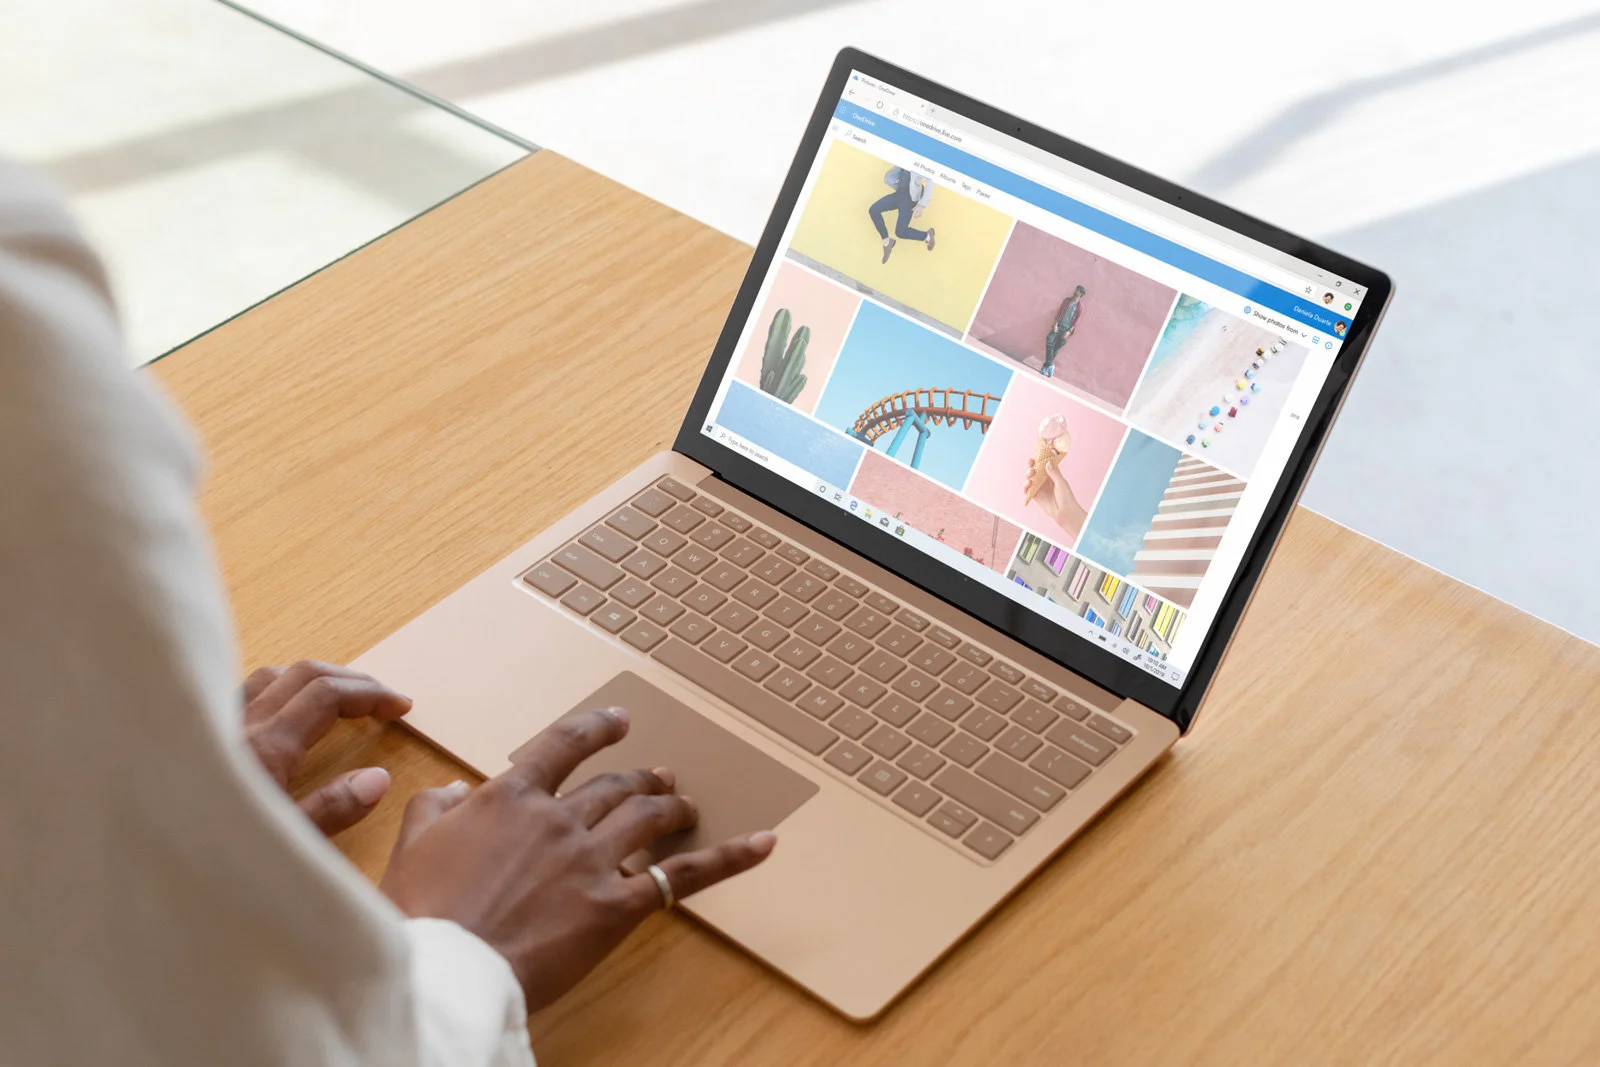 Конкуренты MacBook и AirPods, а также новая Windows 10X: итоги презентации Microsoft Surface - фото 1